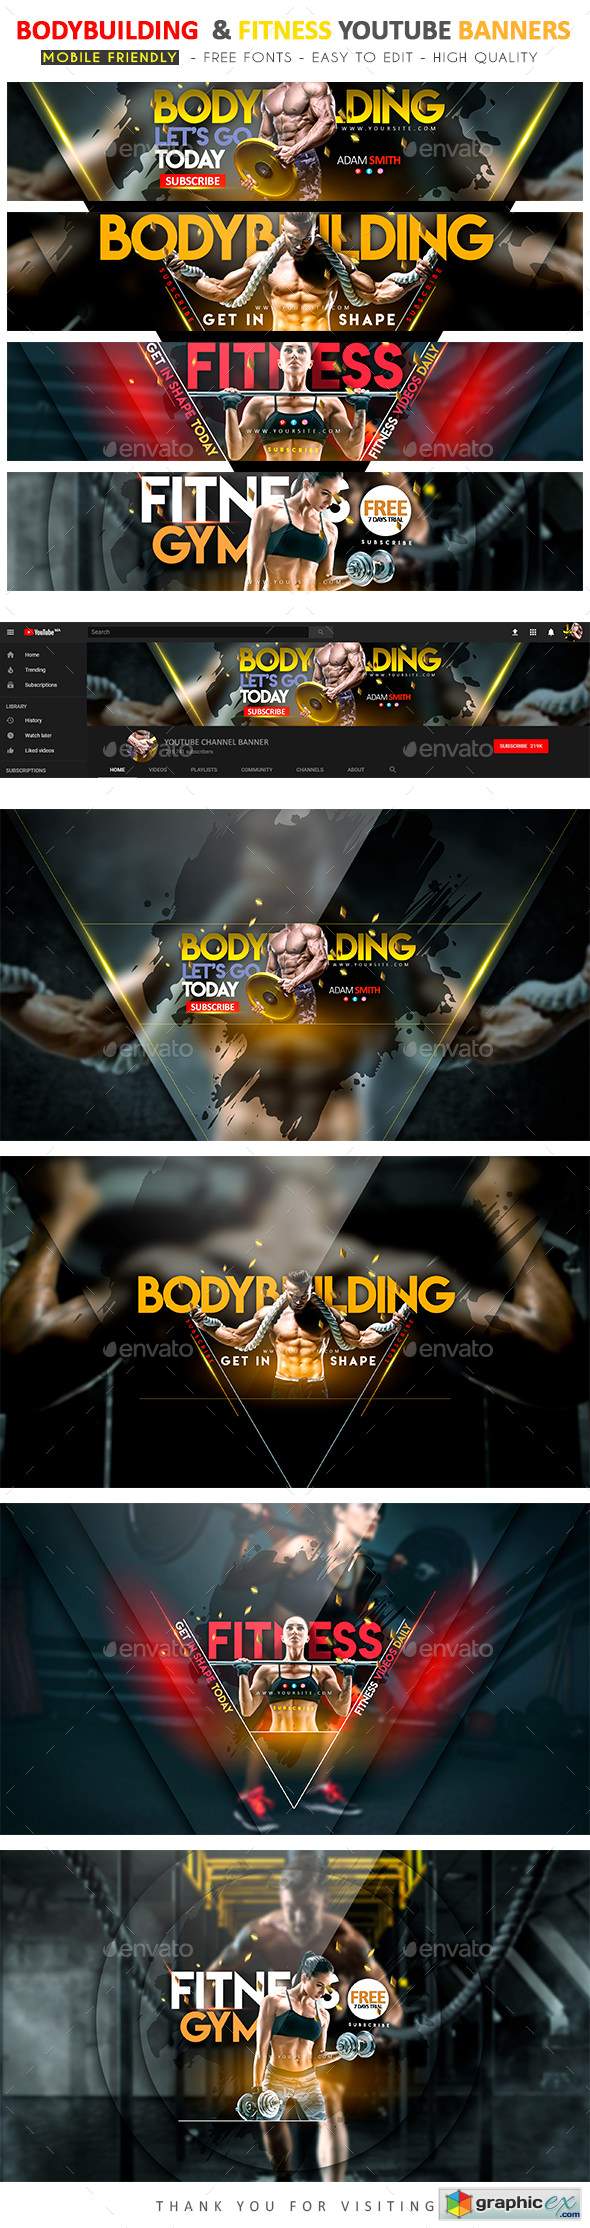 Bodybuilding & Fitness YouTube Banner